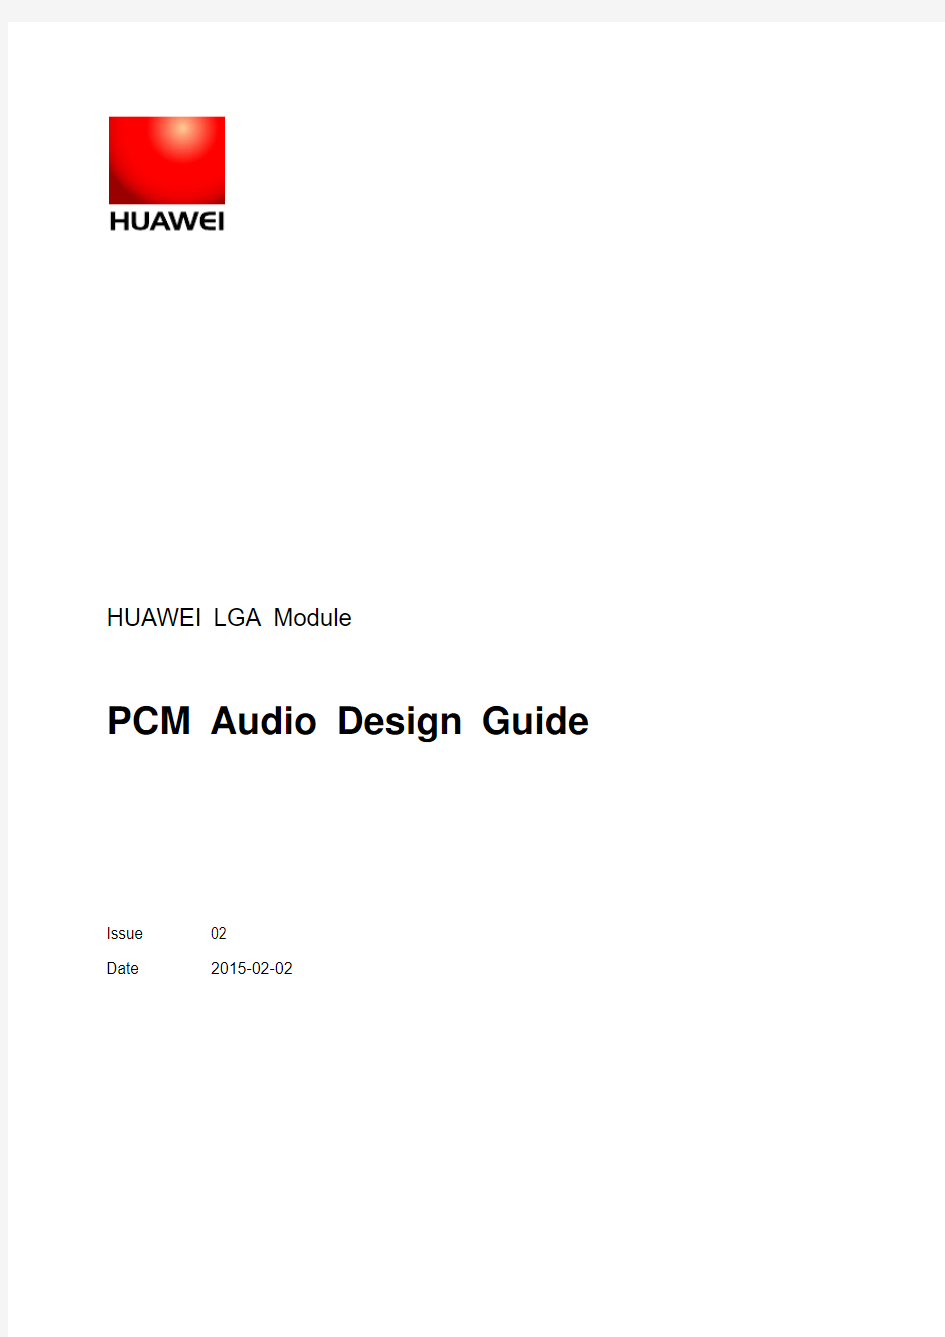 HUAWEI LGA Module PCM Audio Design Guide-(V100R001_02 English)